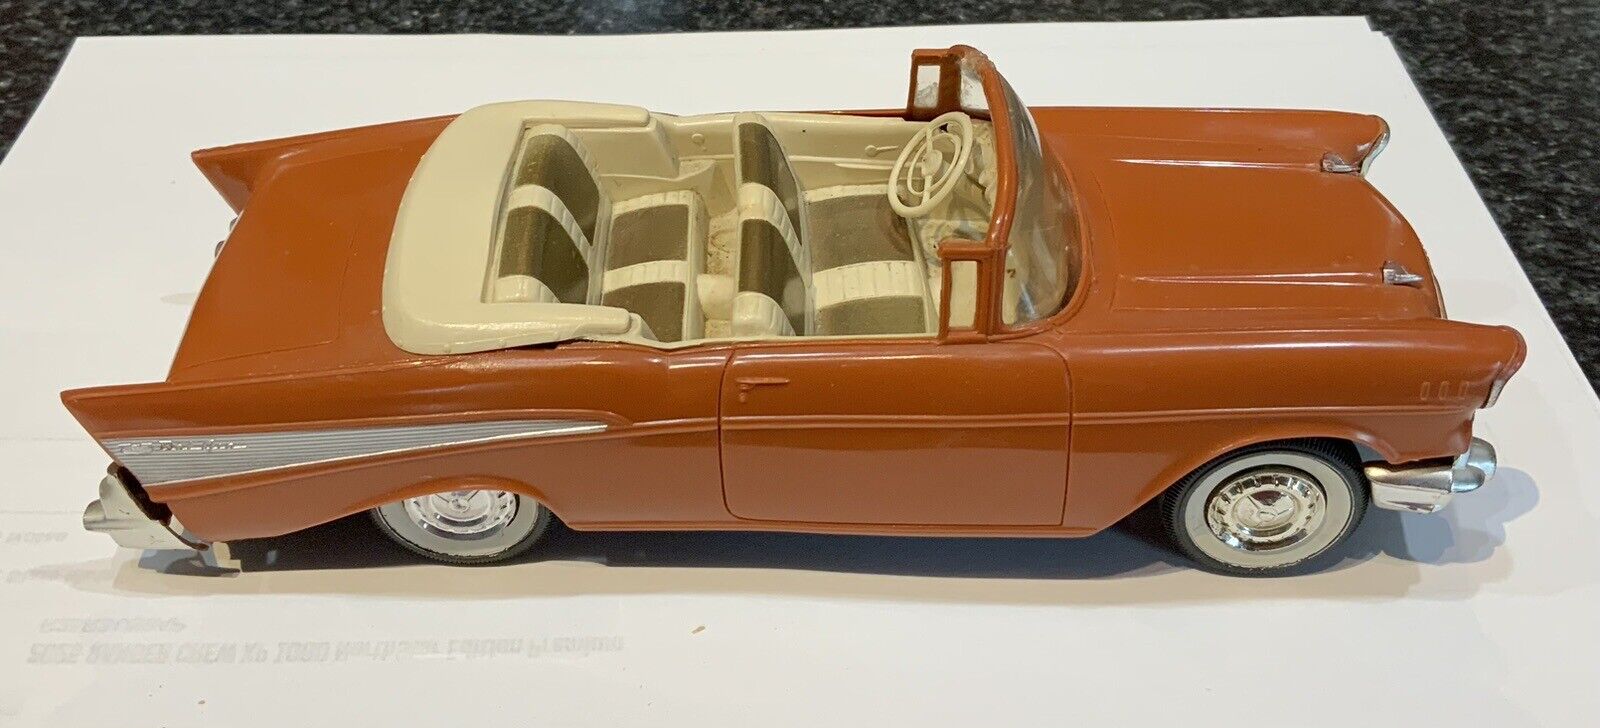 1957 Chevrolet Dealership Promo Convertible 